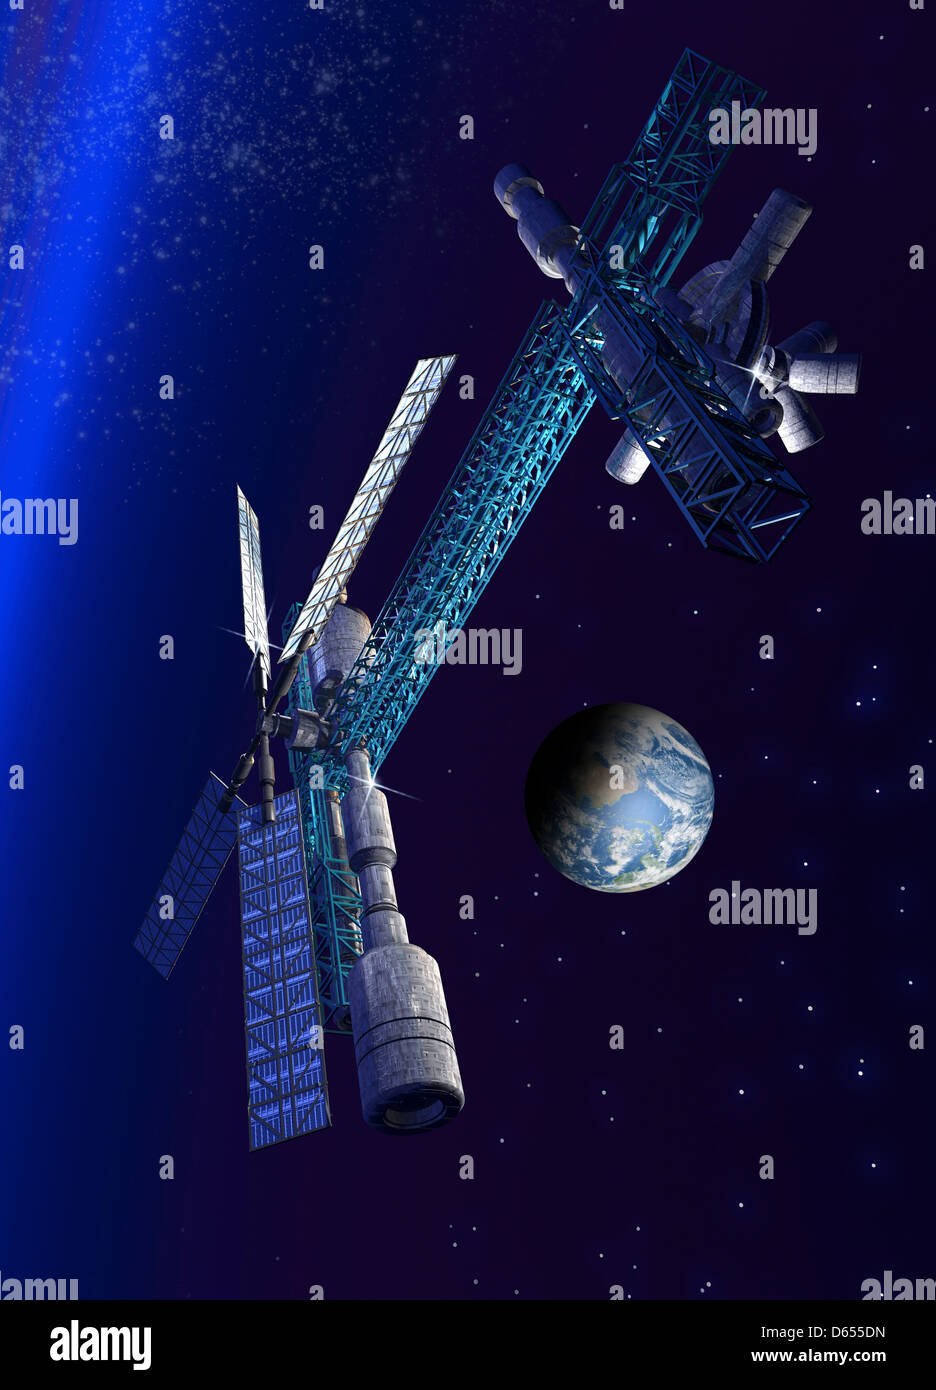 Futuristic space station, artwork Stock Photo